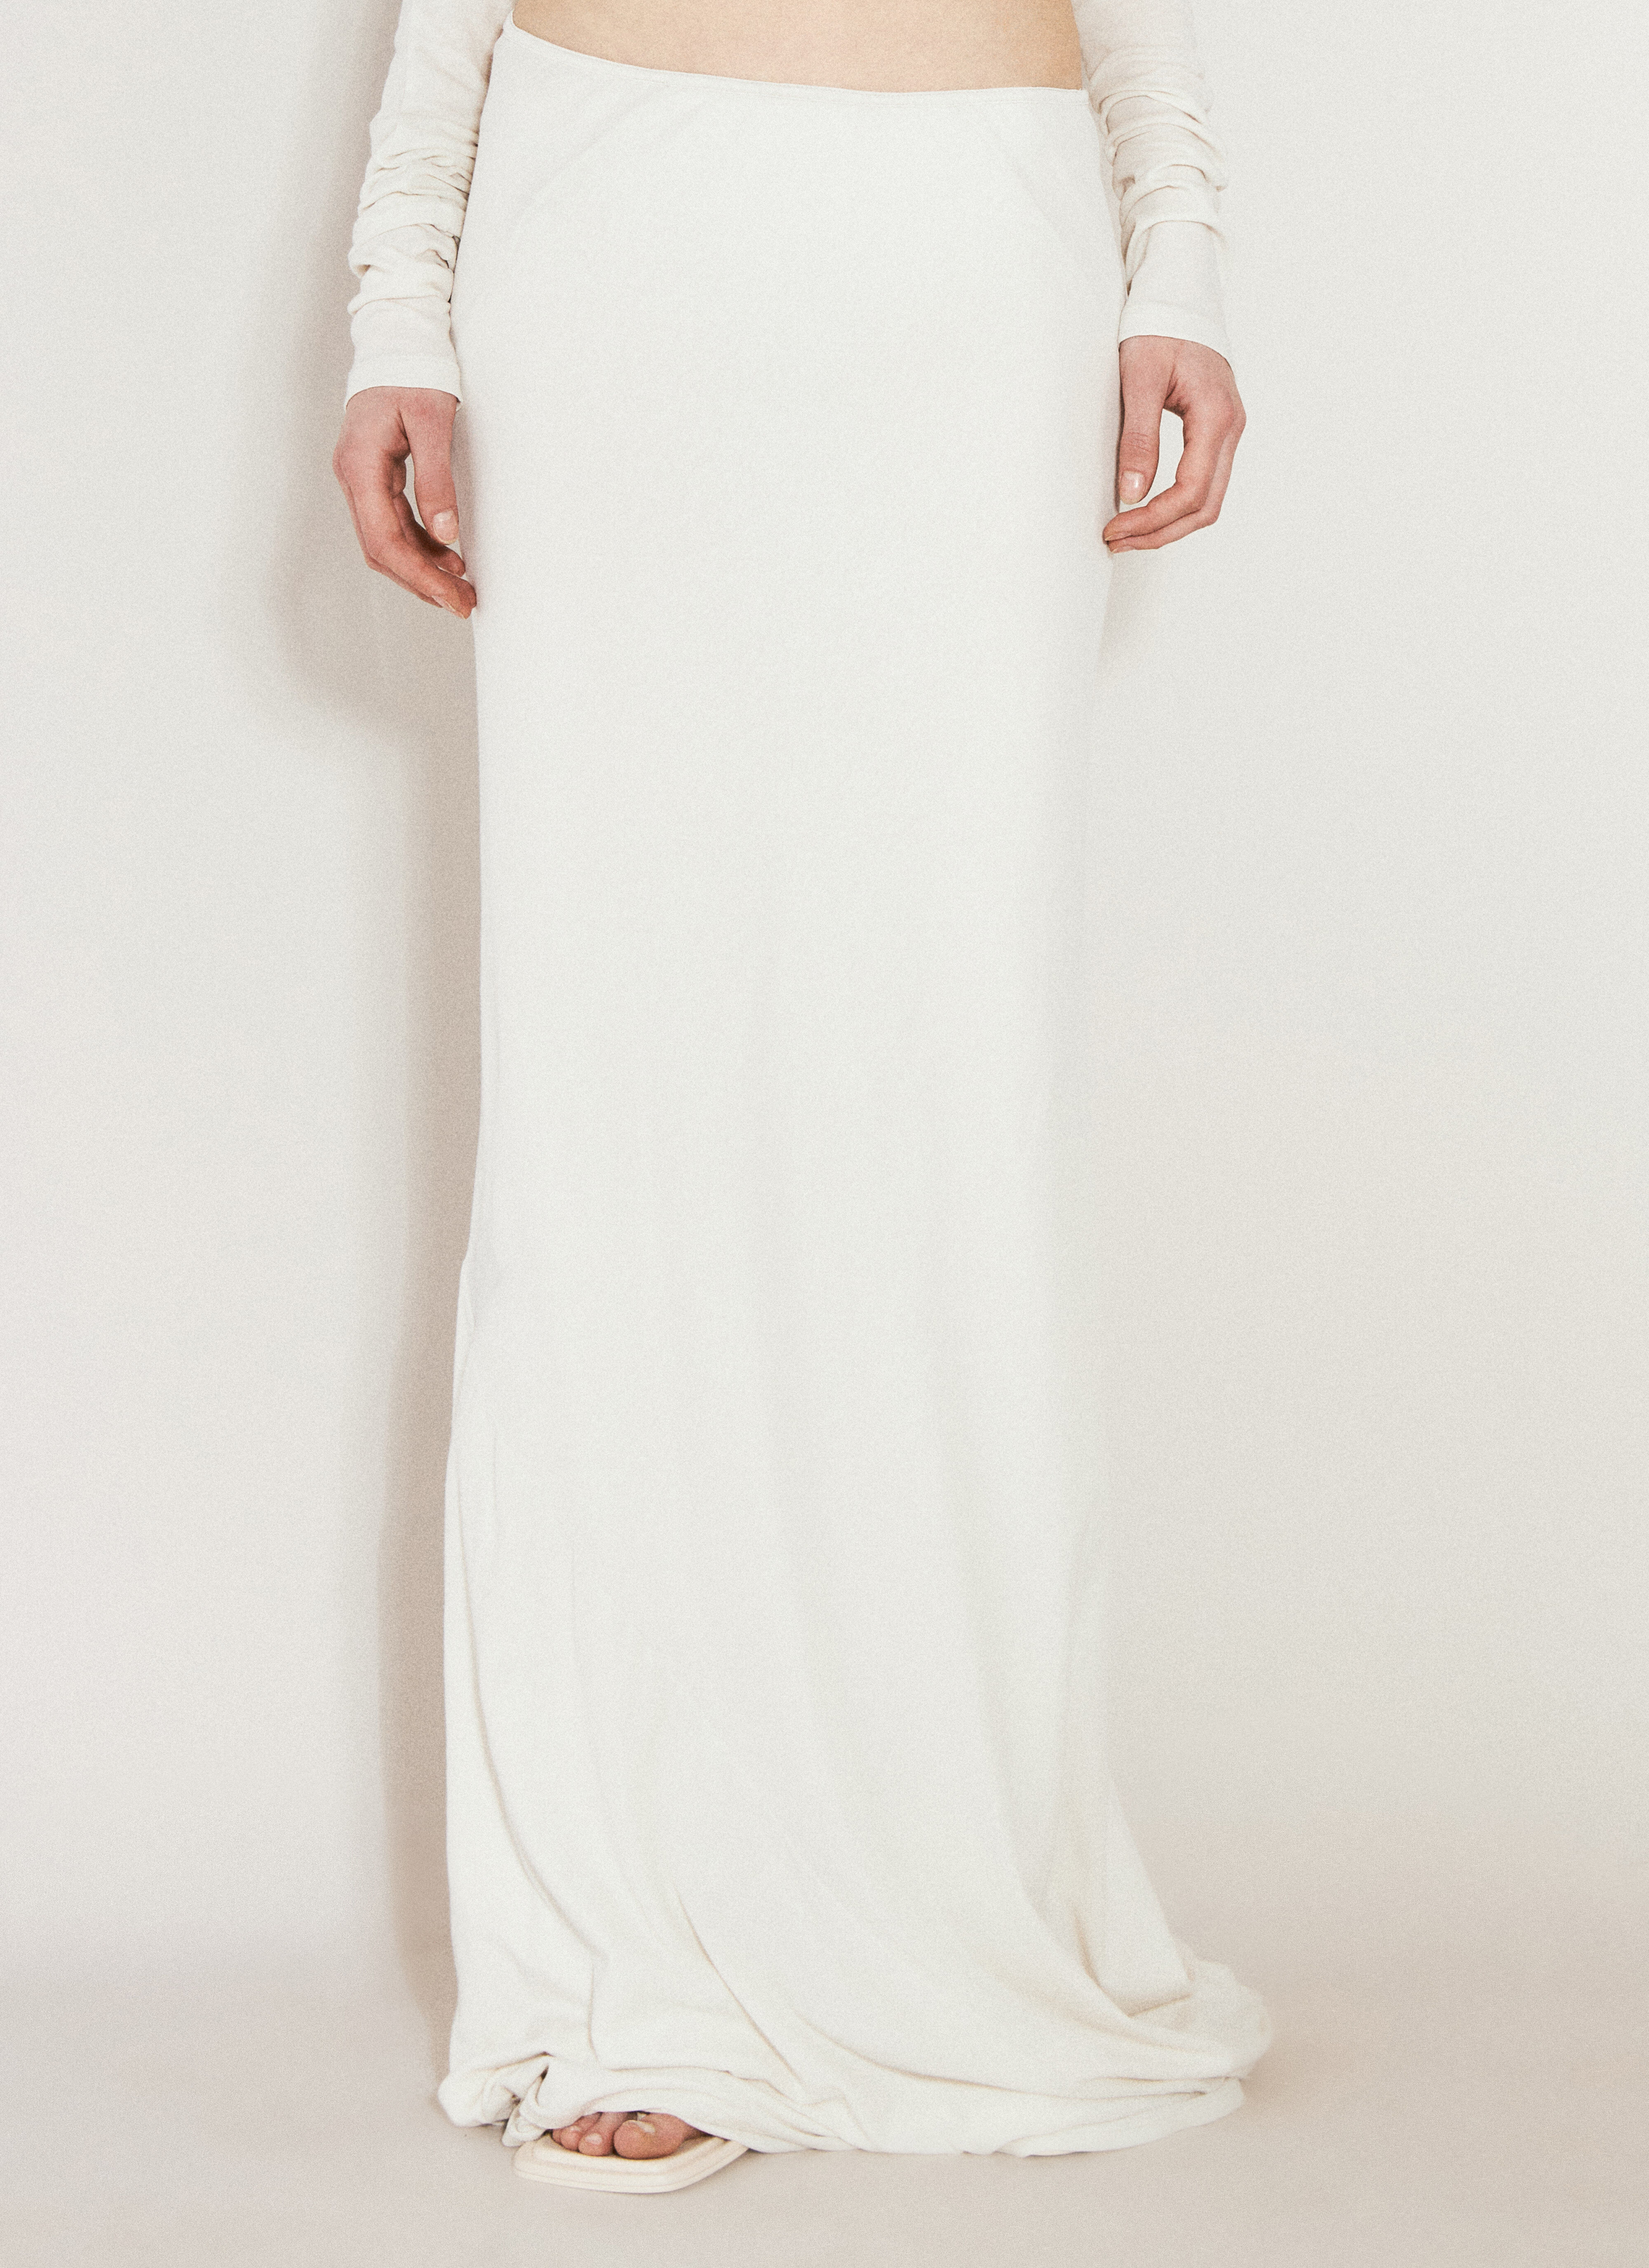 Entire Studios Tink 长款半身裙 白色 ent0254011